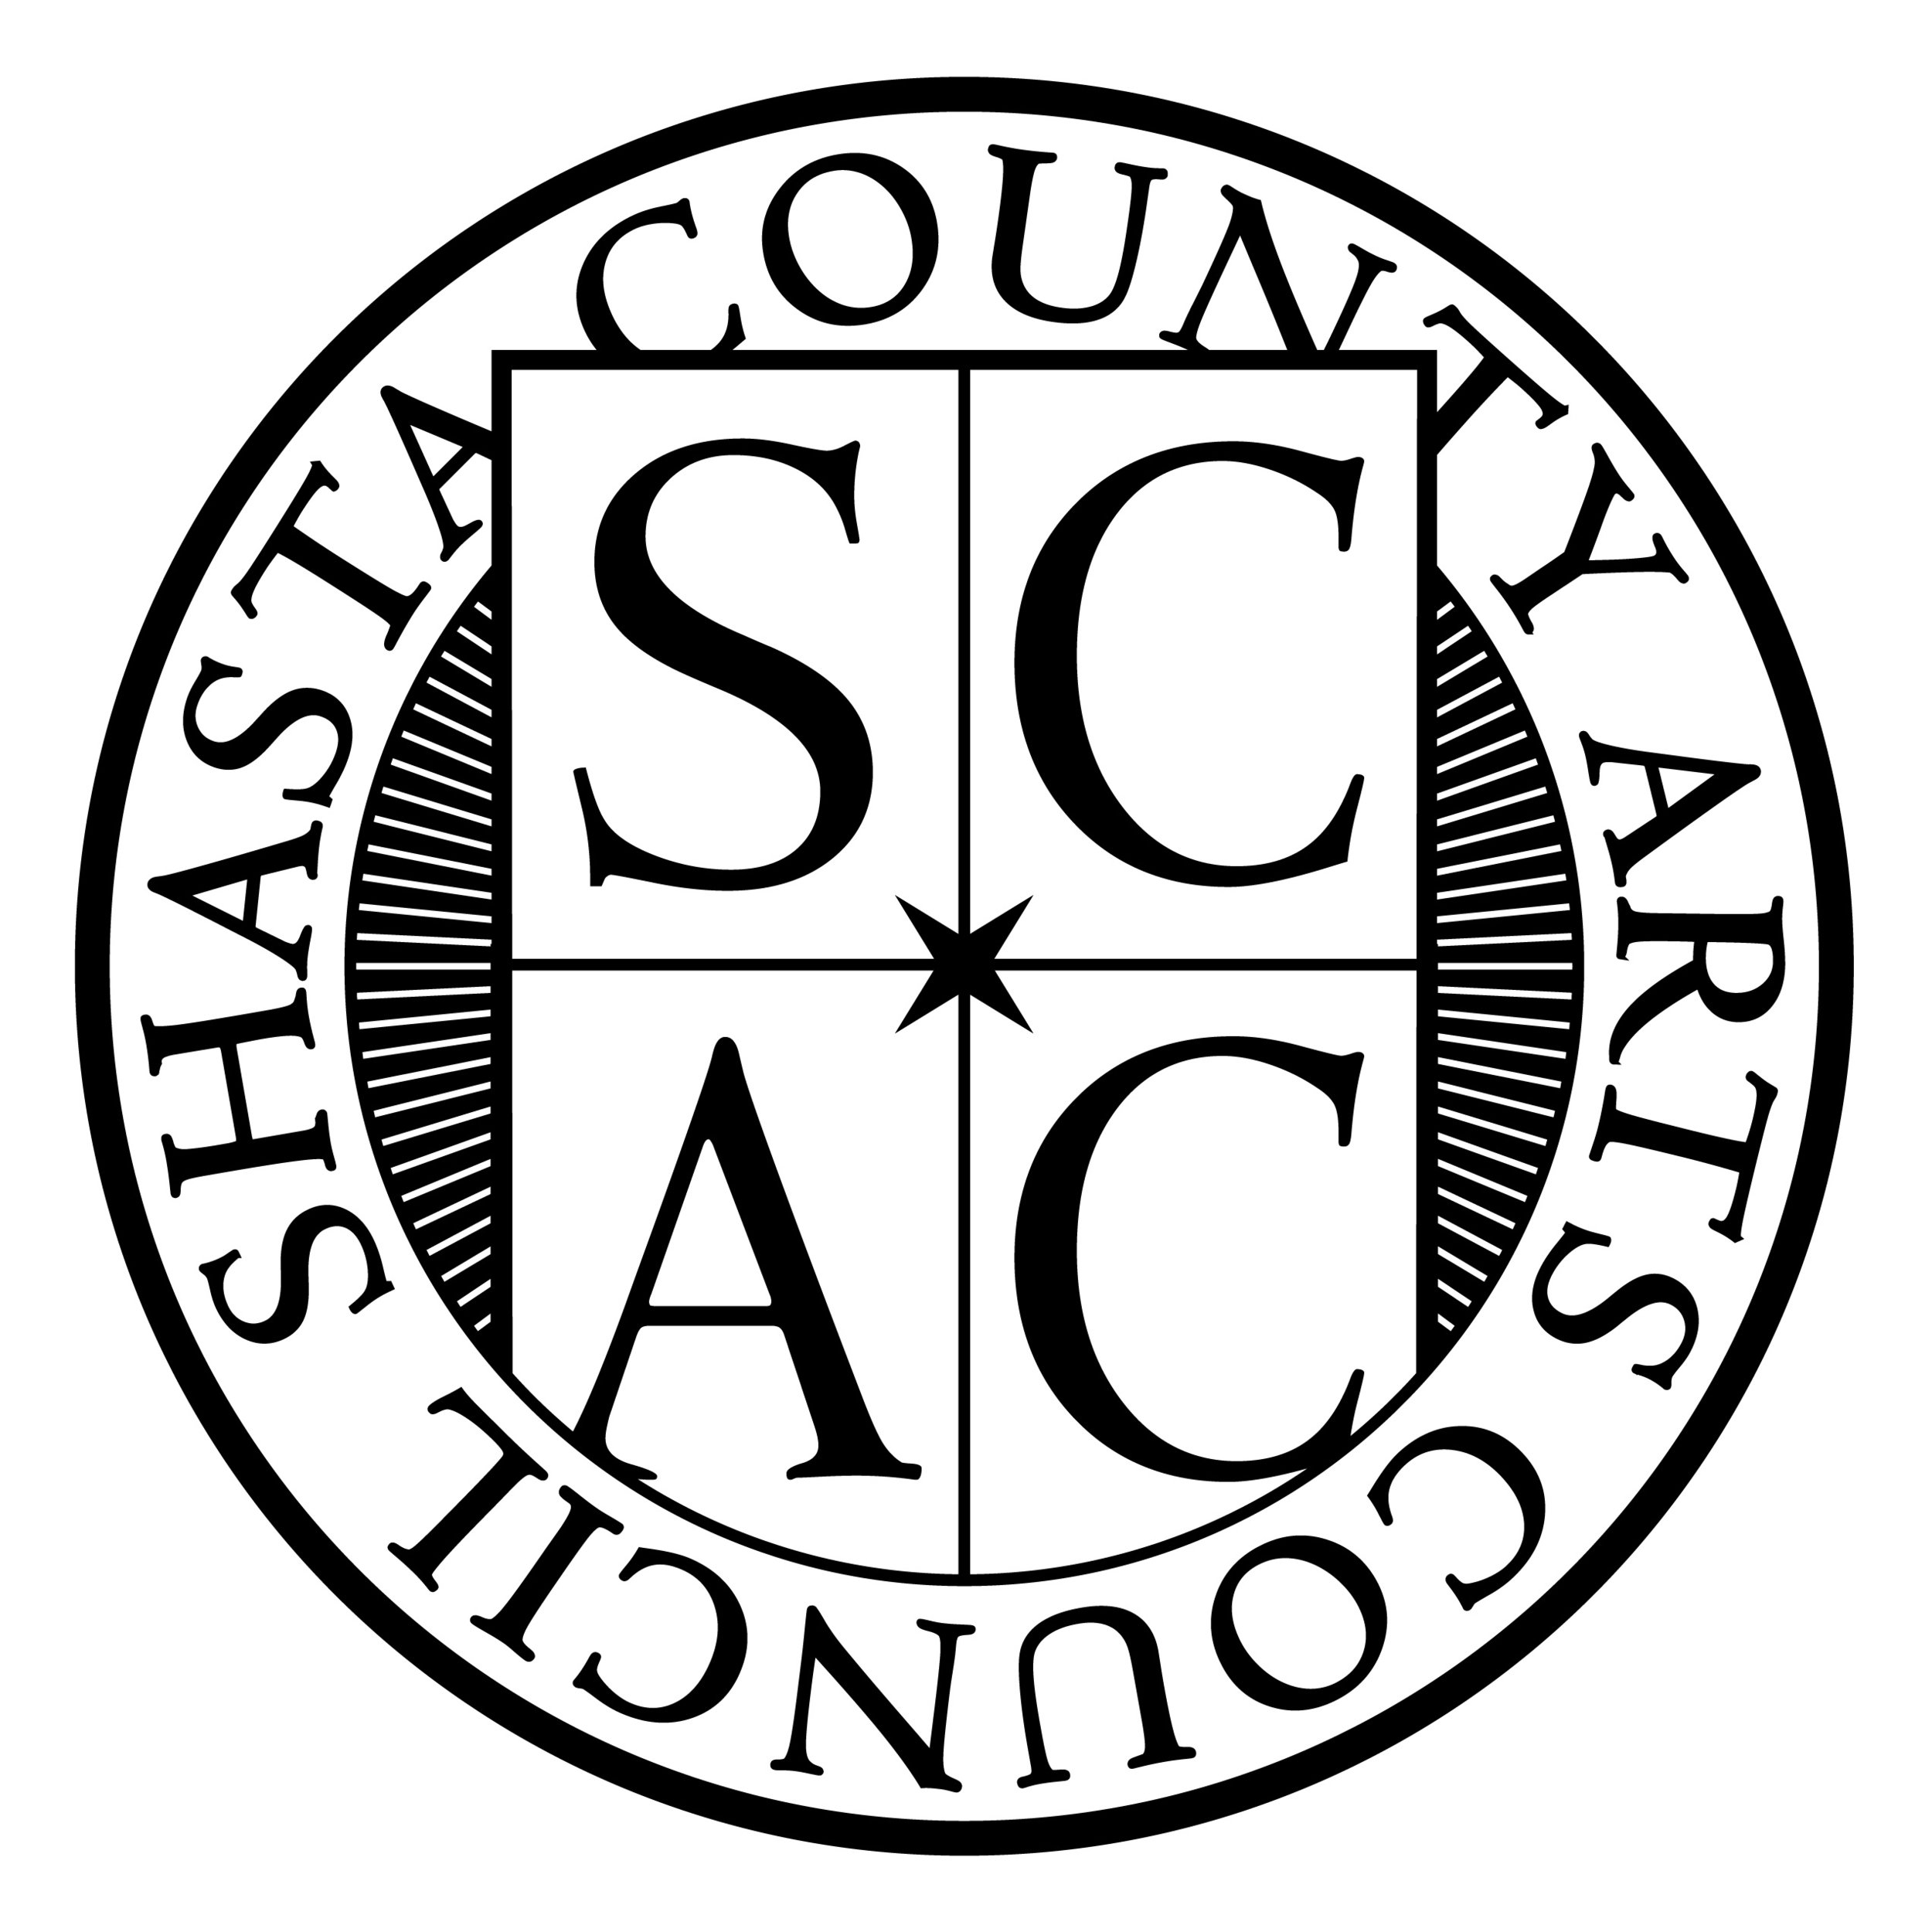 SCAC Logo black copy.jpg